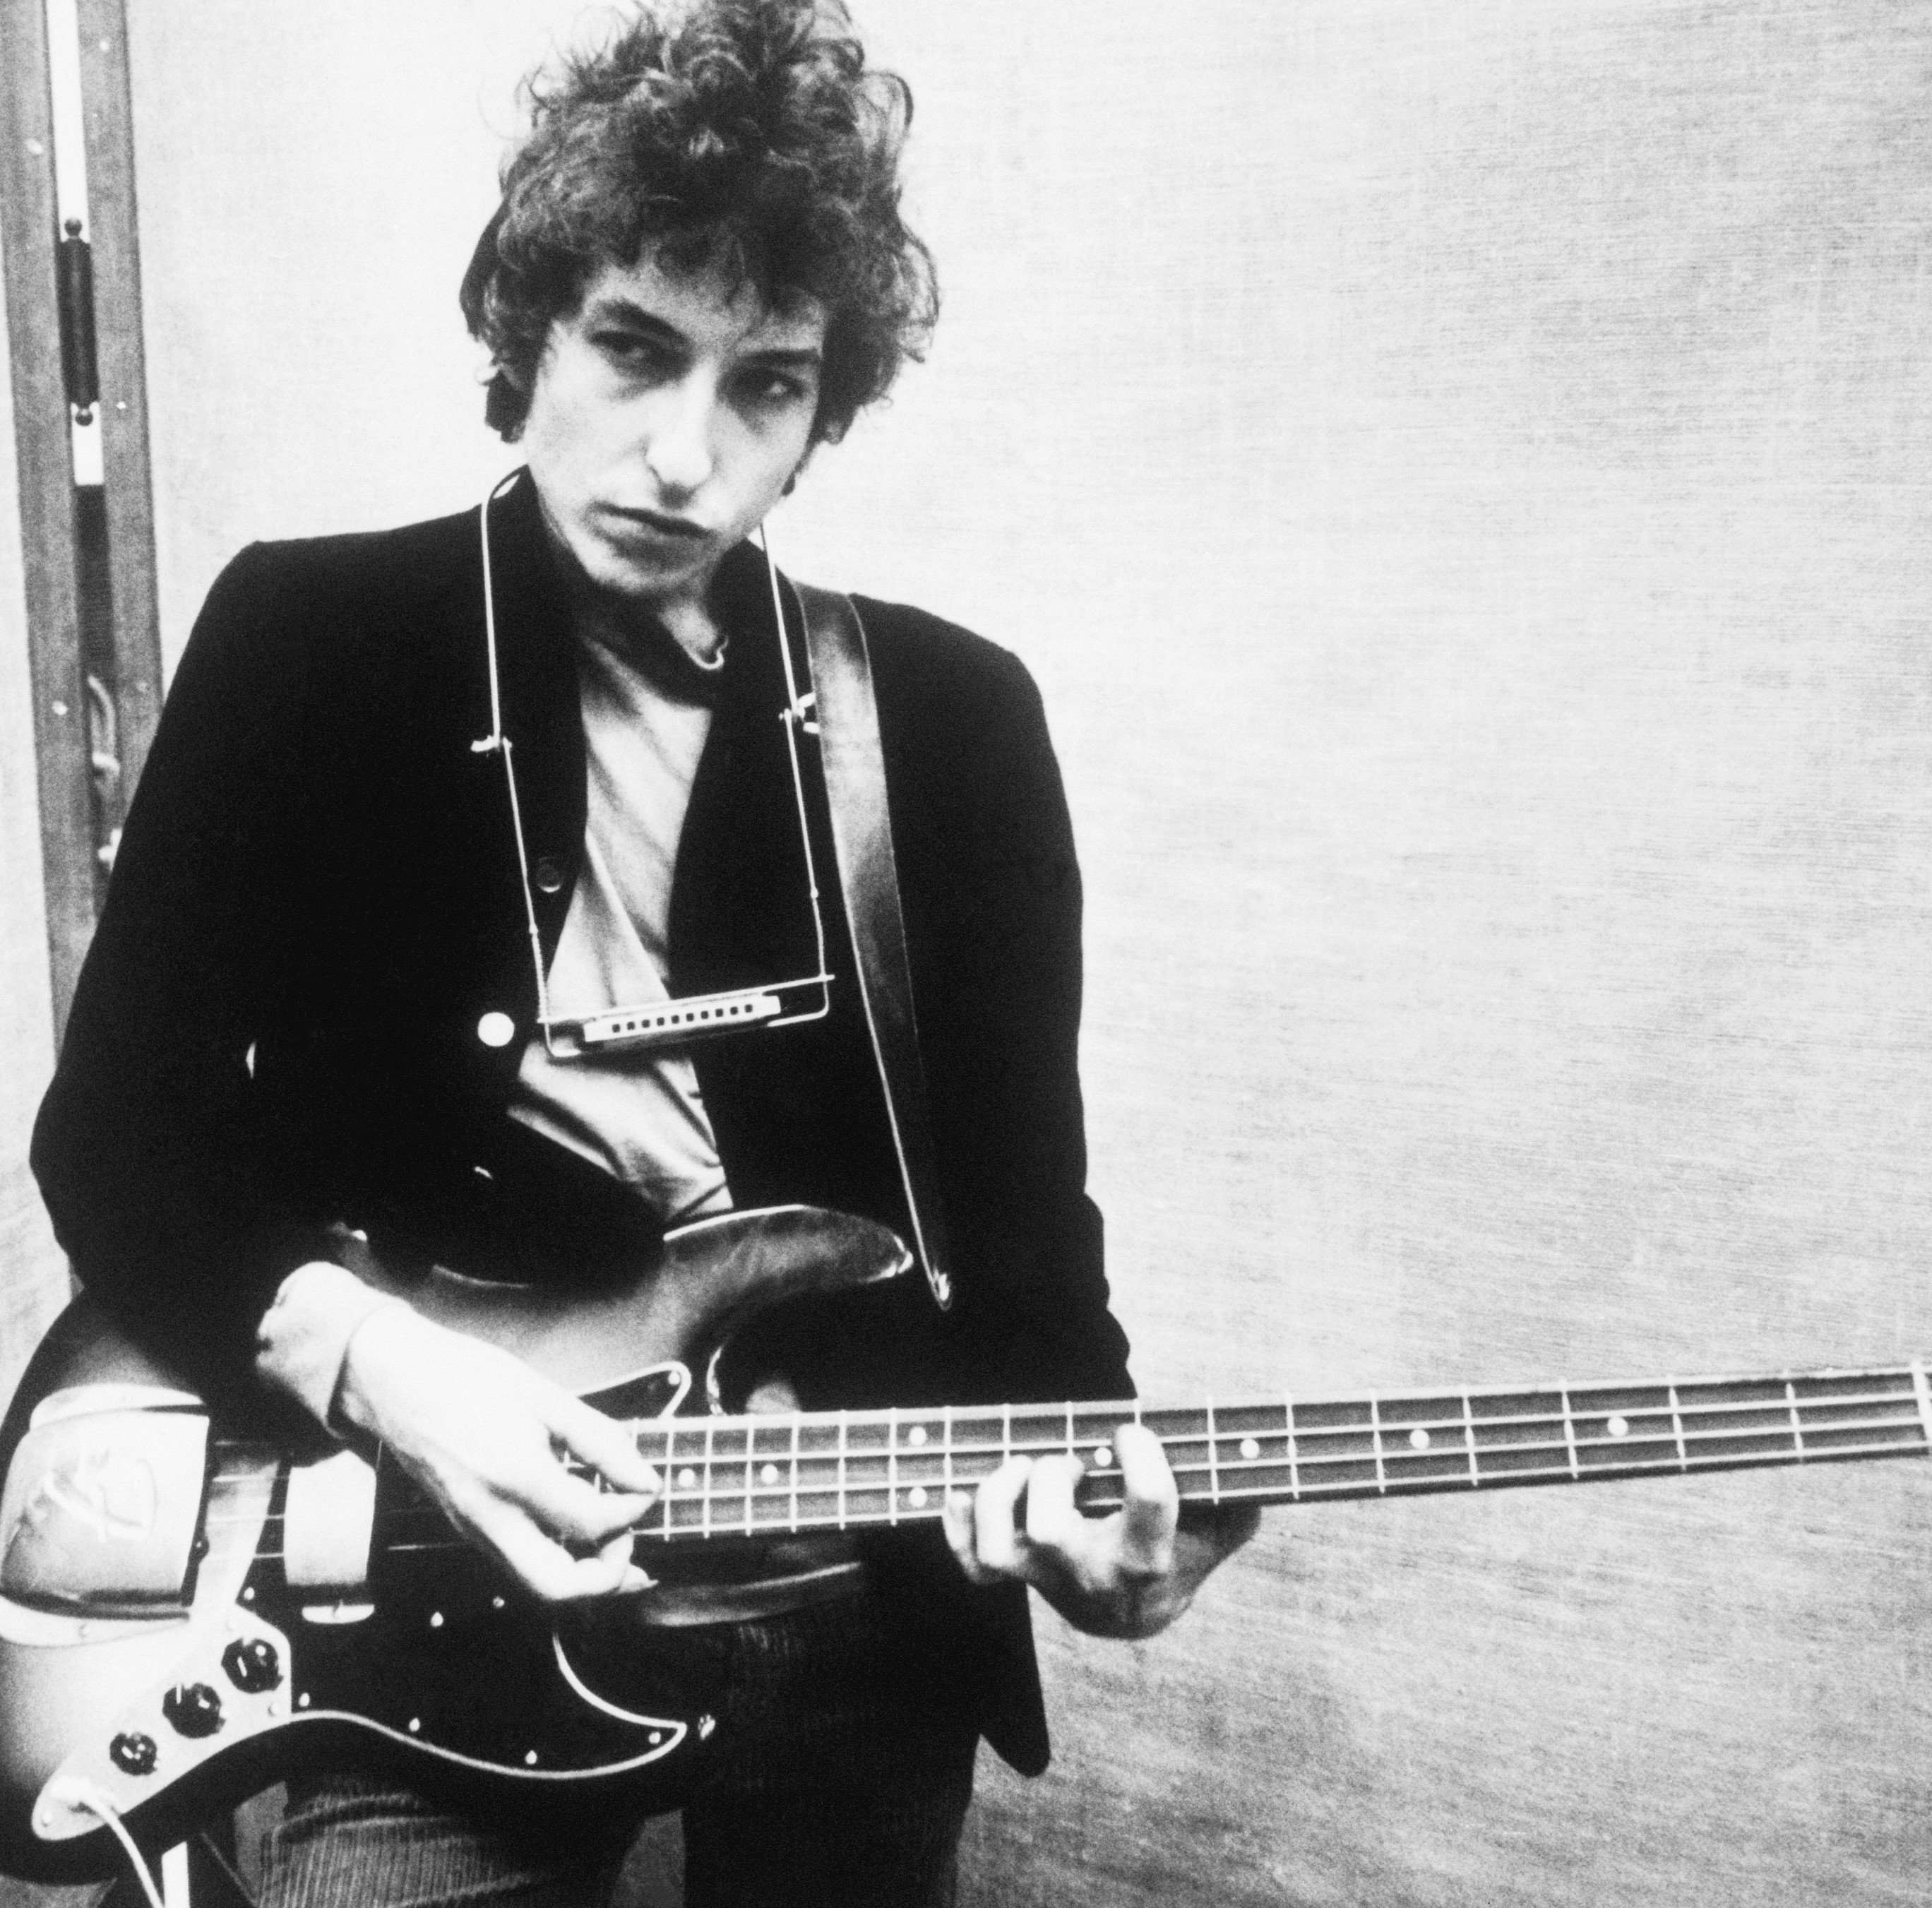 "A Hard Rain's a-Gonna Fall" singer Bob Dylan with a guitar